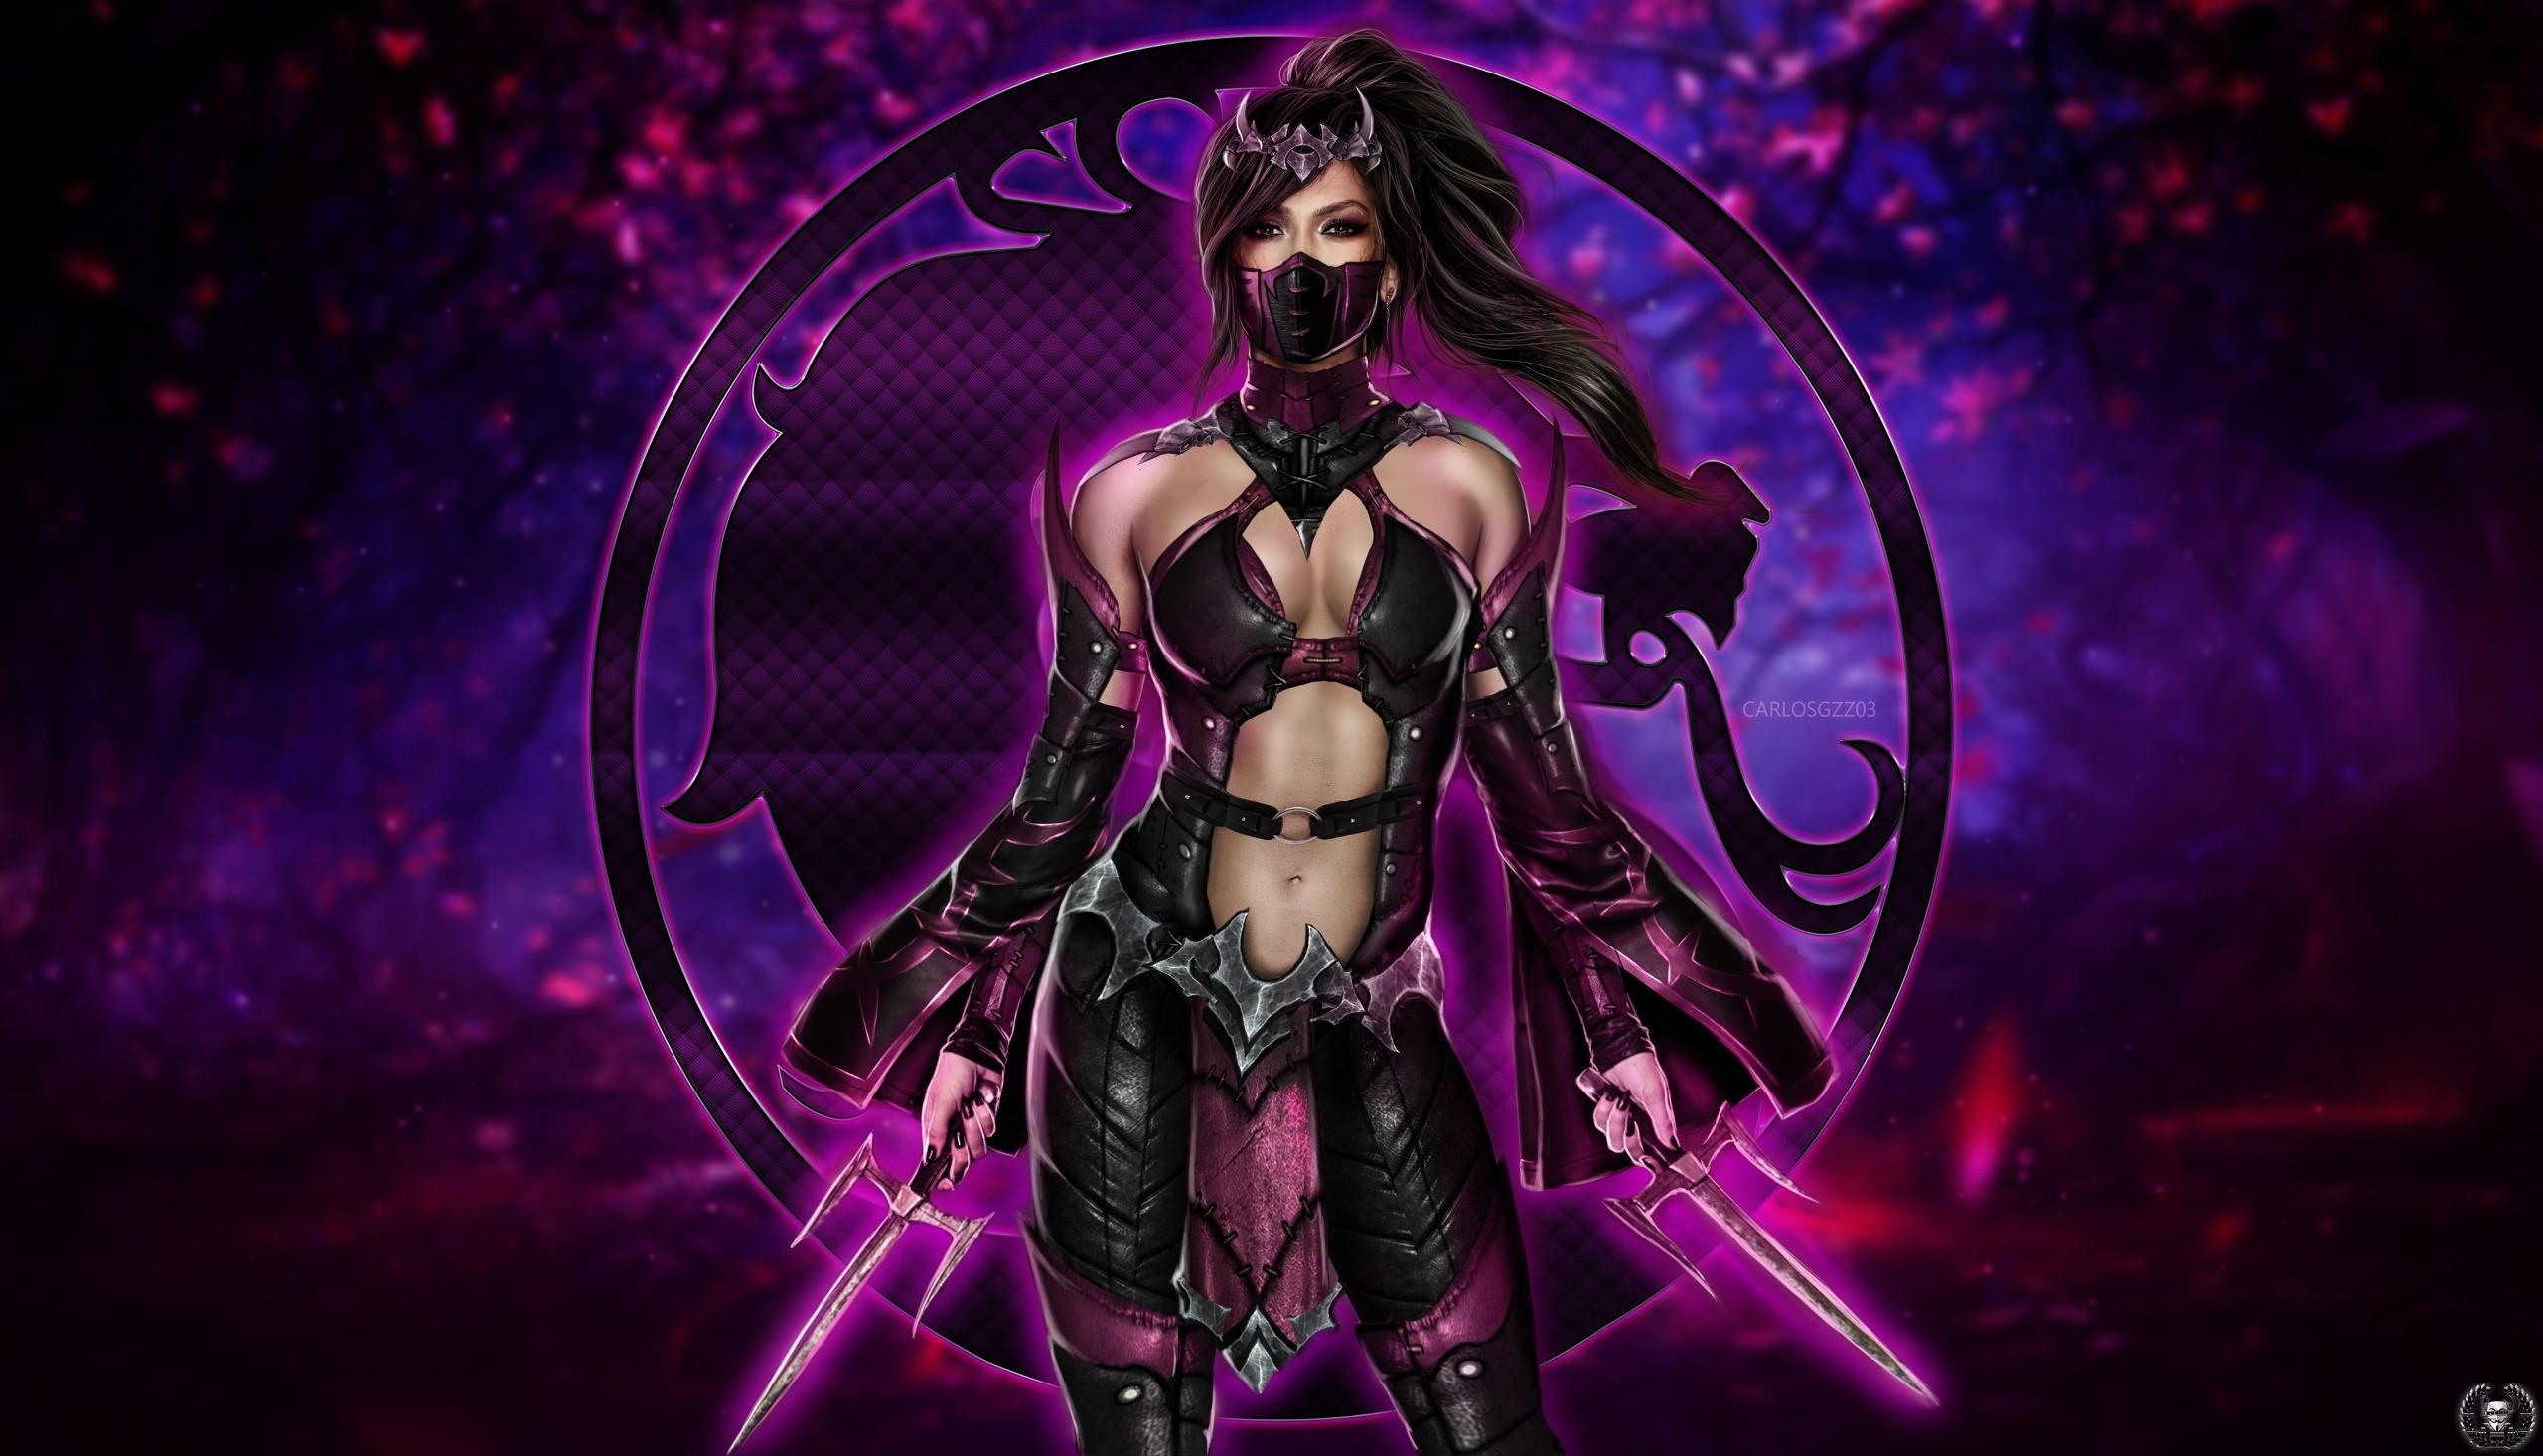 Wallpaper ID 564302  fantasy art dark Mileena Mortal Kombat face  1080P fantasy girl demon free download